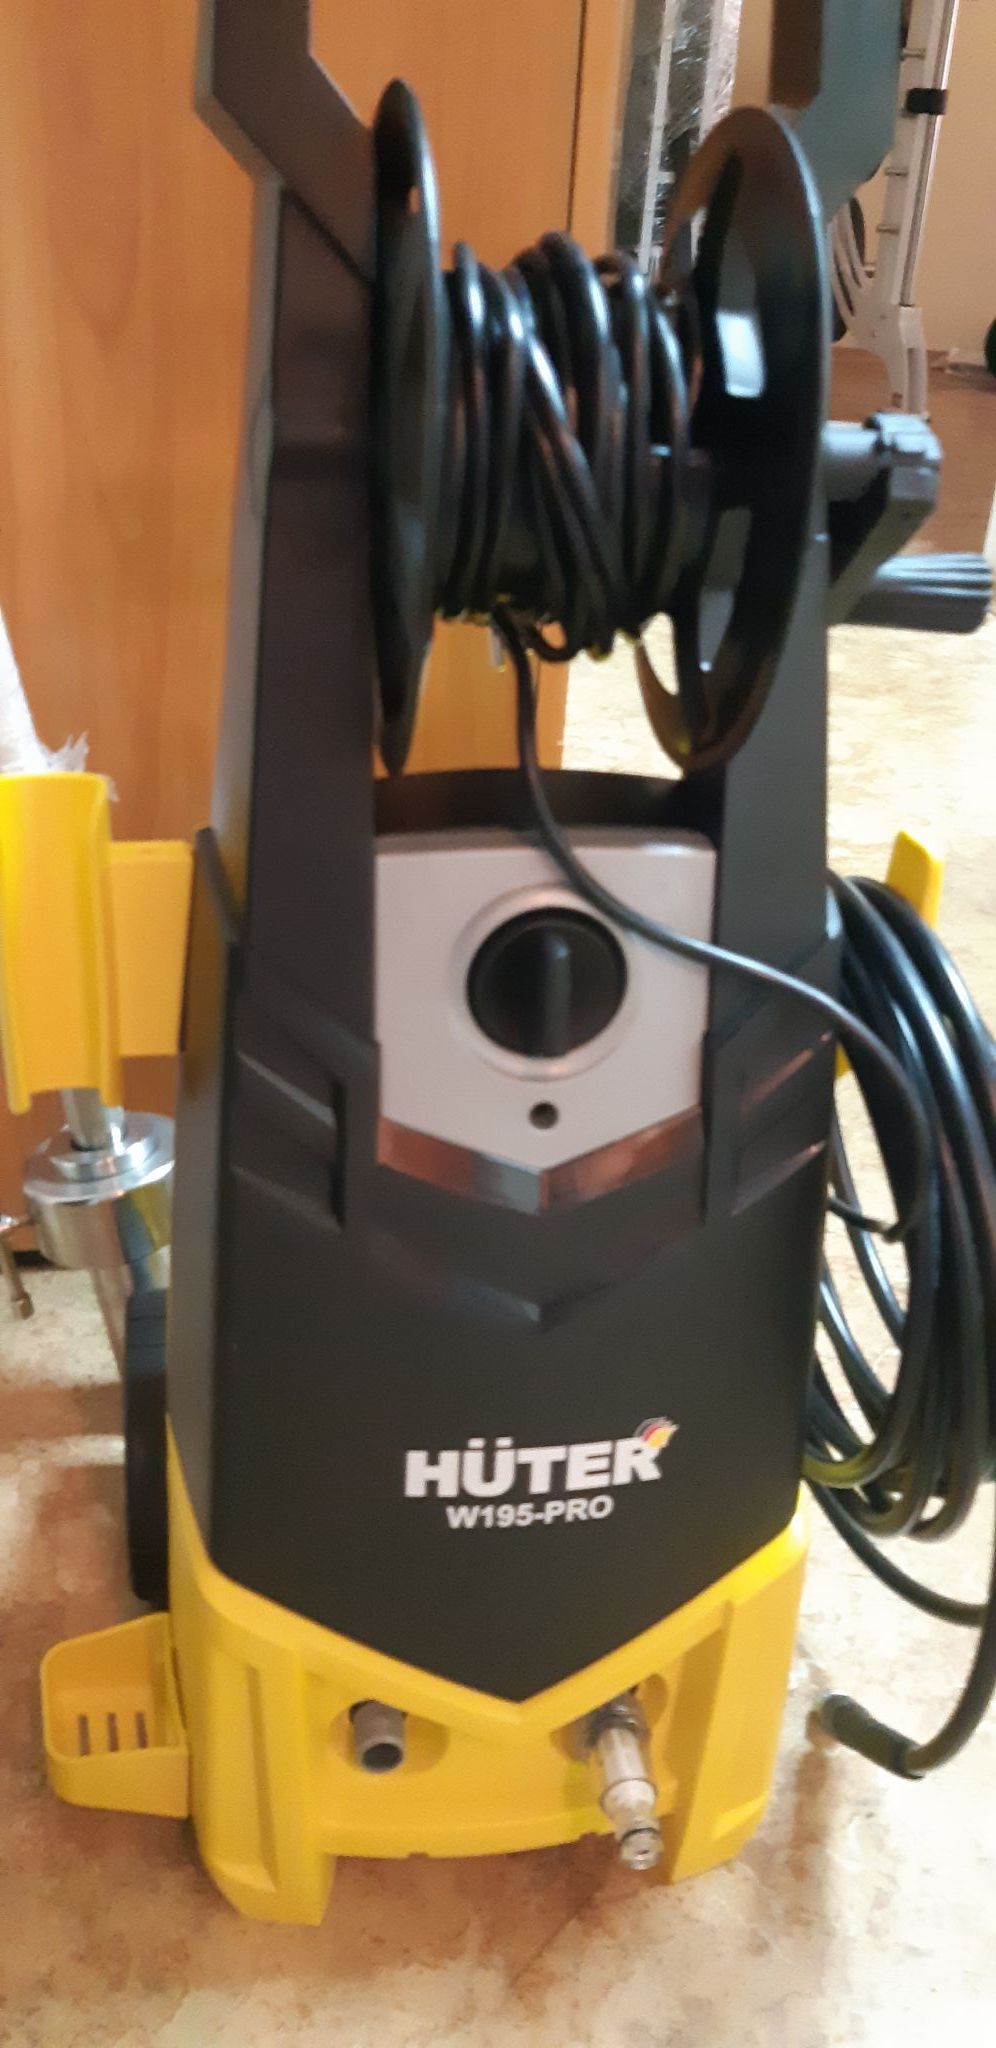 Hüter w195 pro цены. Huter w195-Pro. Мойка высокого давления Huter w195-Pro. Минимойка Хутер 195. Мойка высокого давления Huter w195-Pro комплектация.